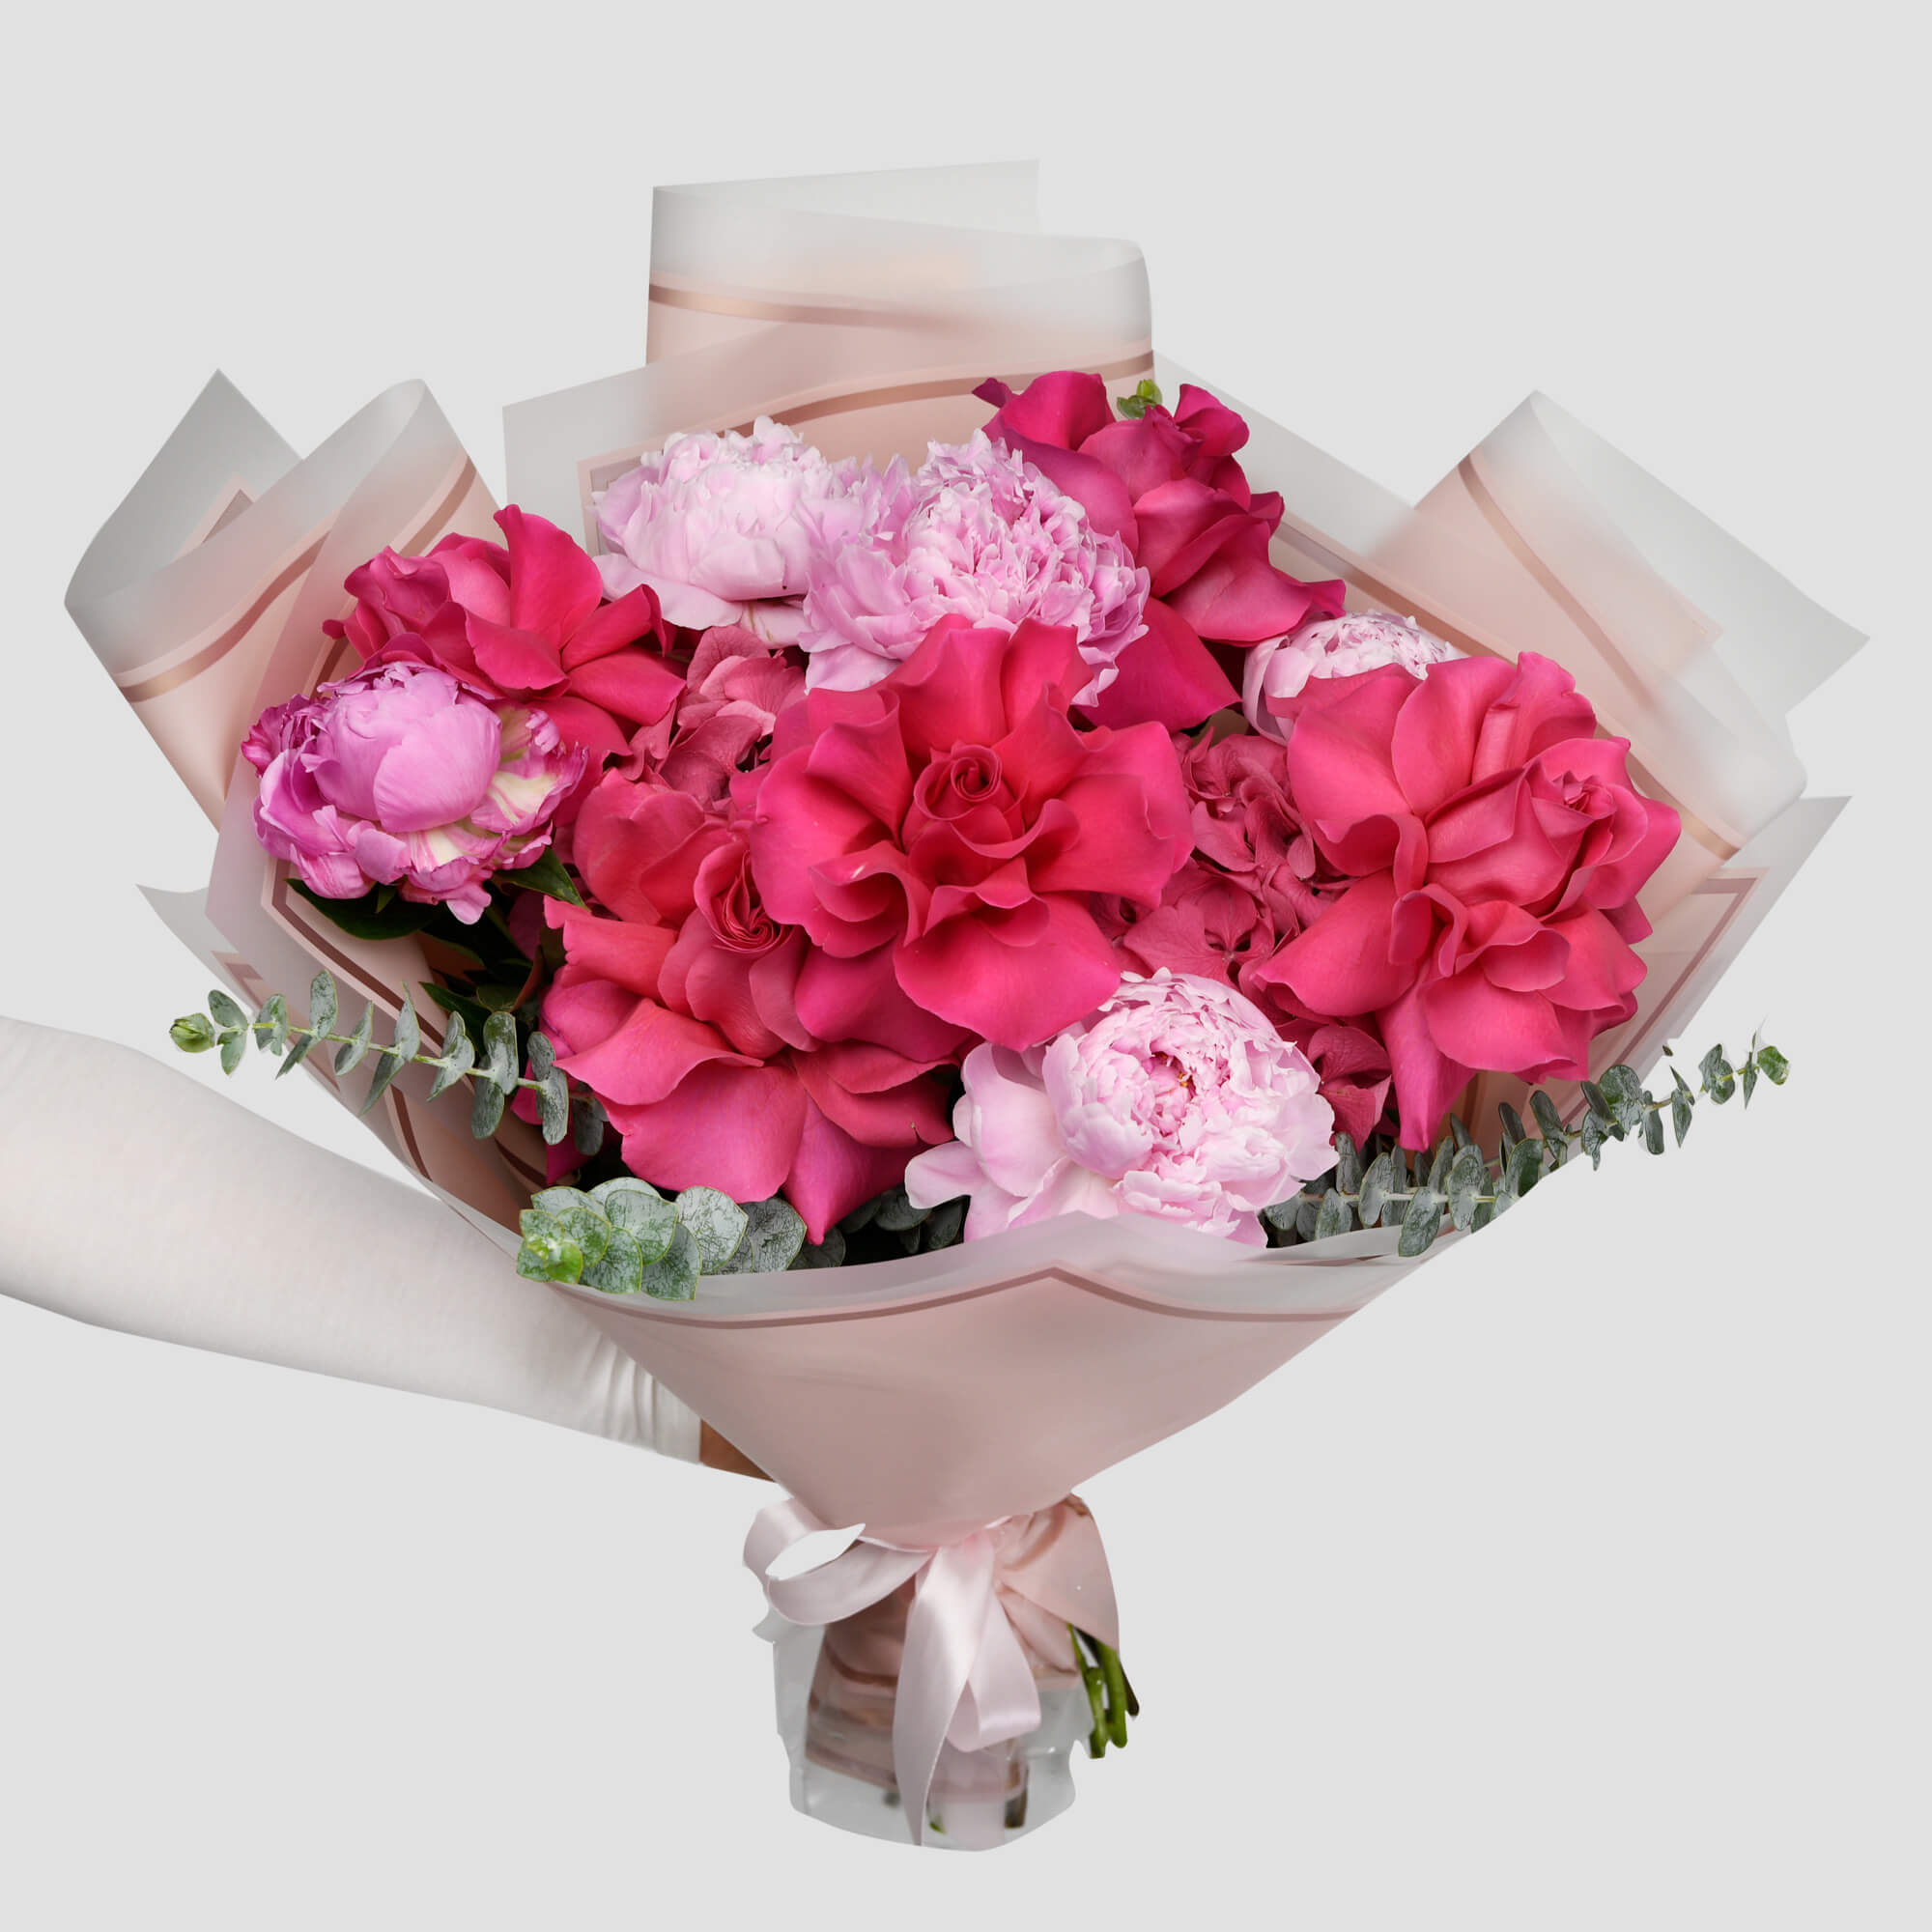 Buchet cu trandafiri Pink, hortensie si bujori roz